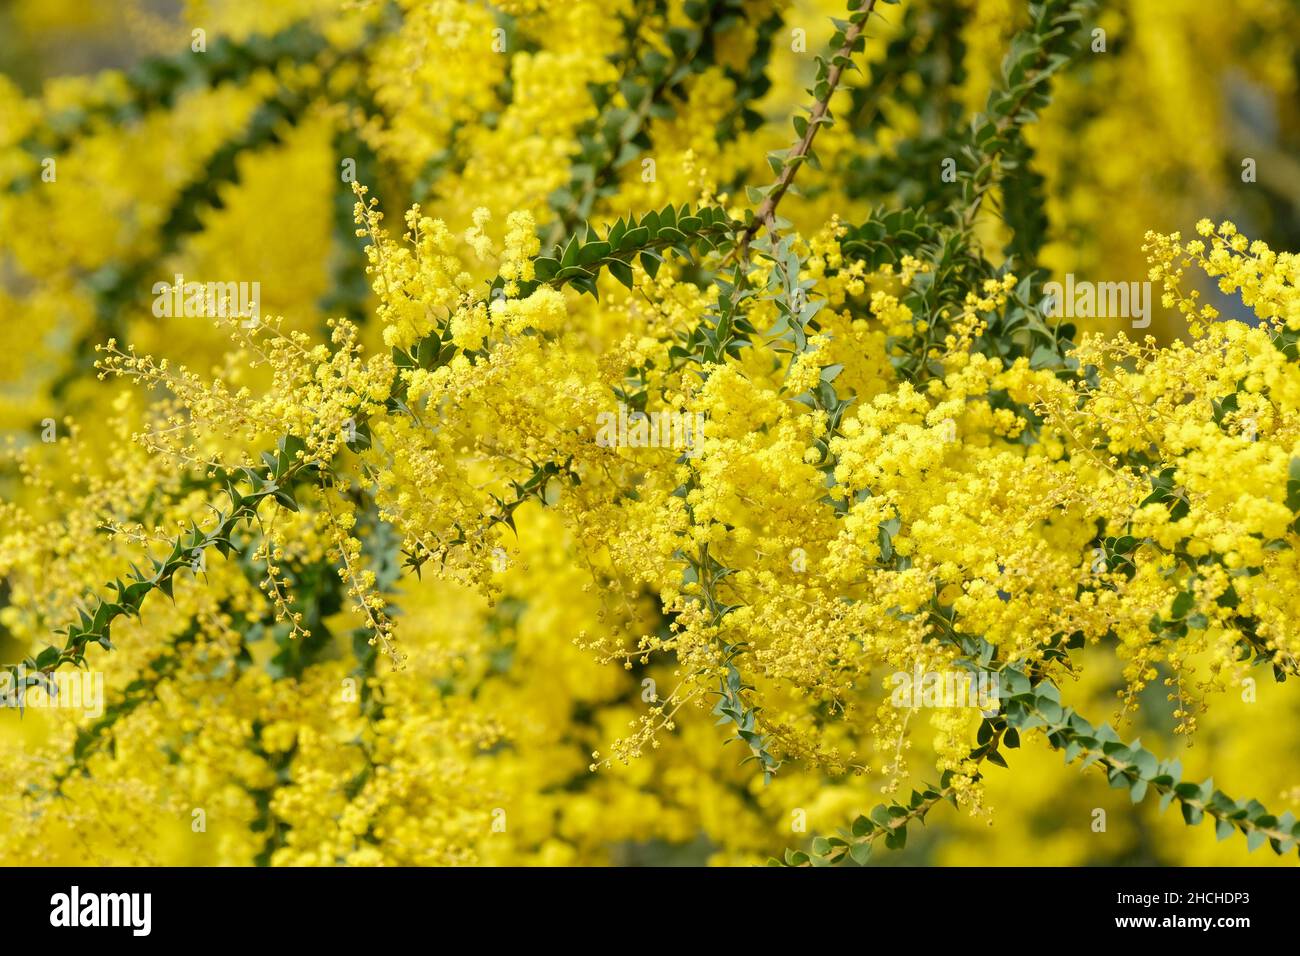 Acacia pravissima, Oven's wattle tree flowering in spring Stock Photo